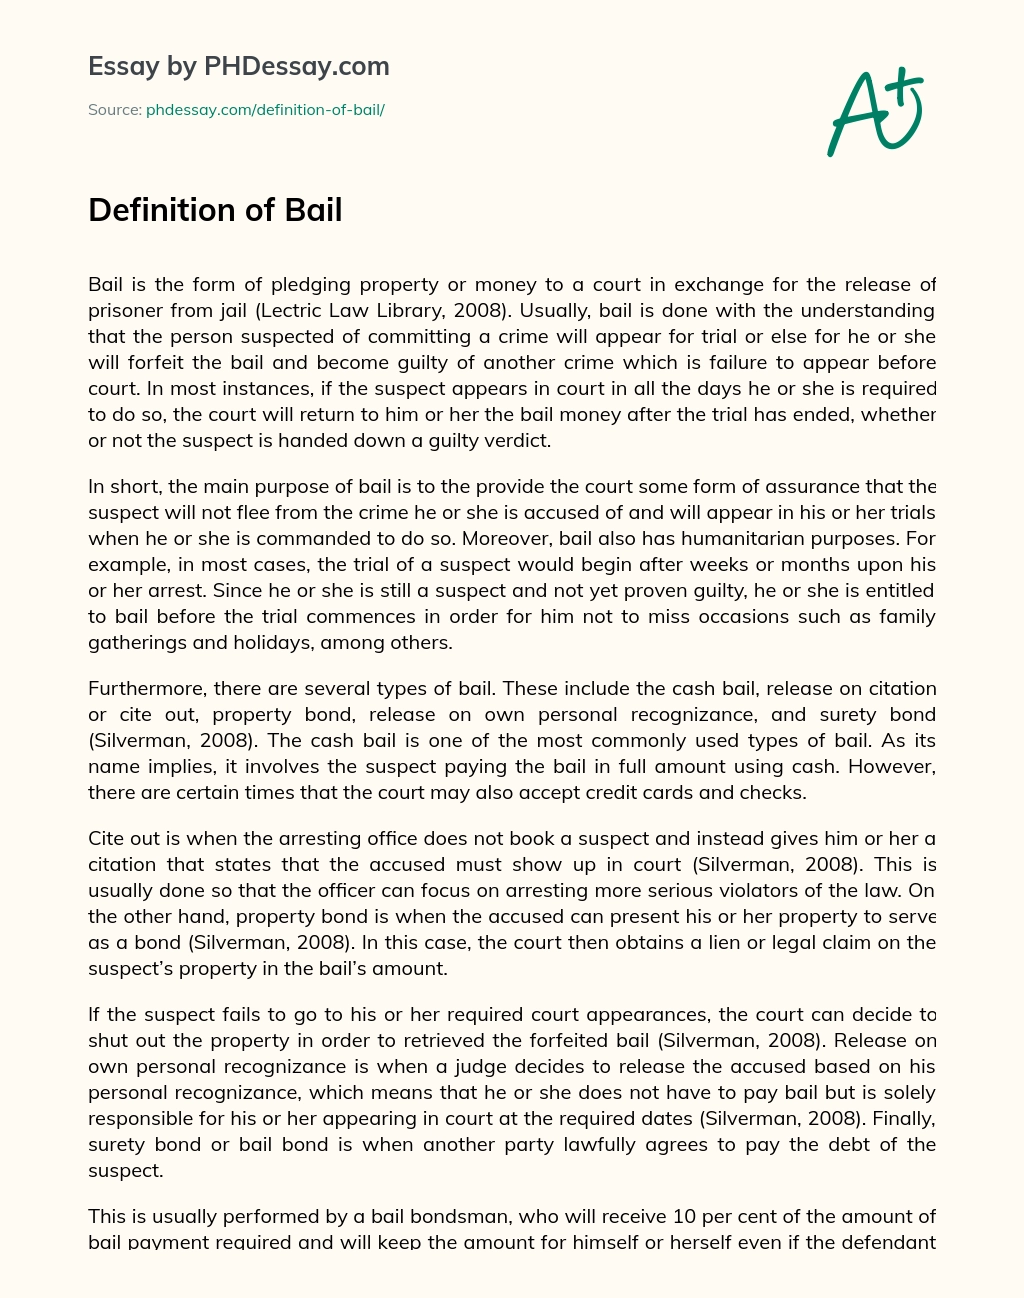 Definition of Bail essay